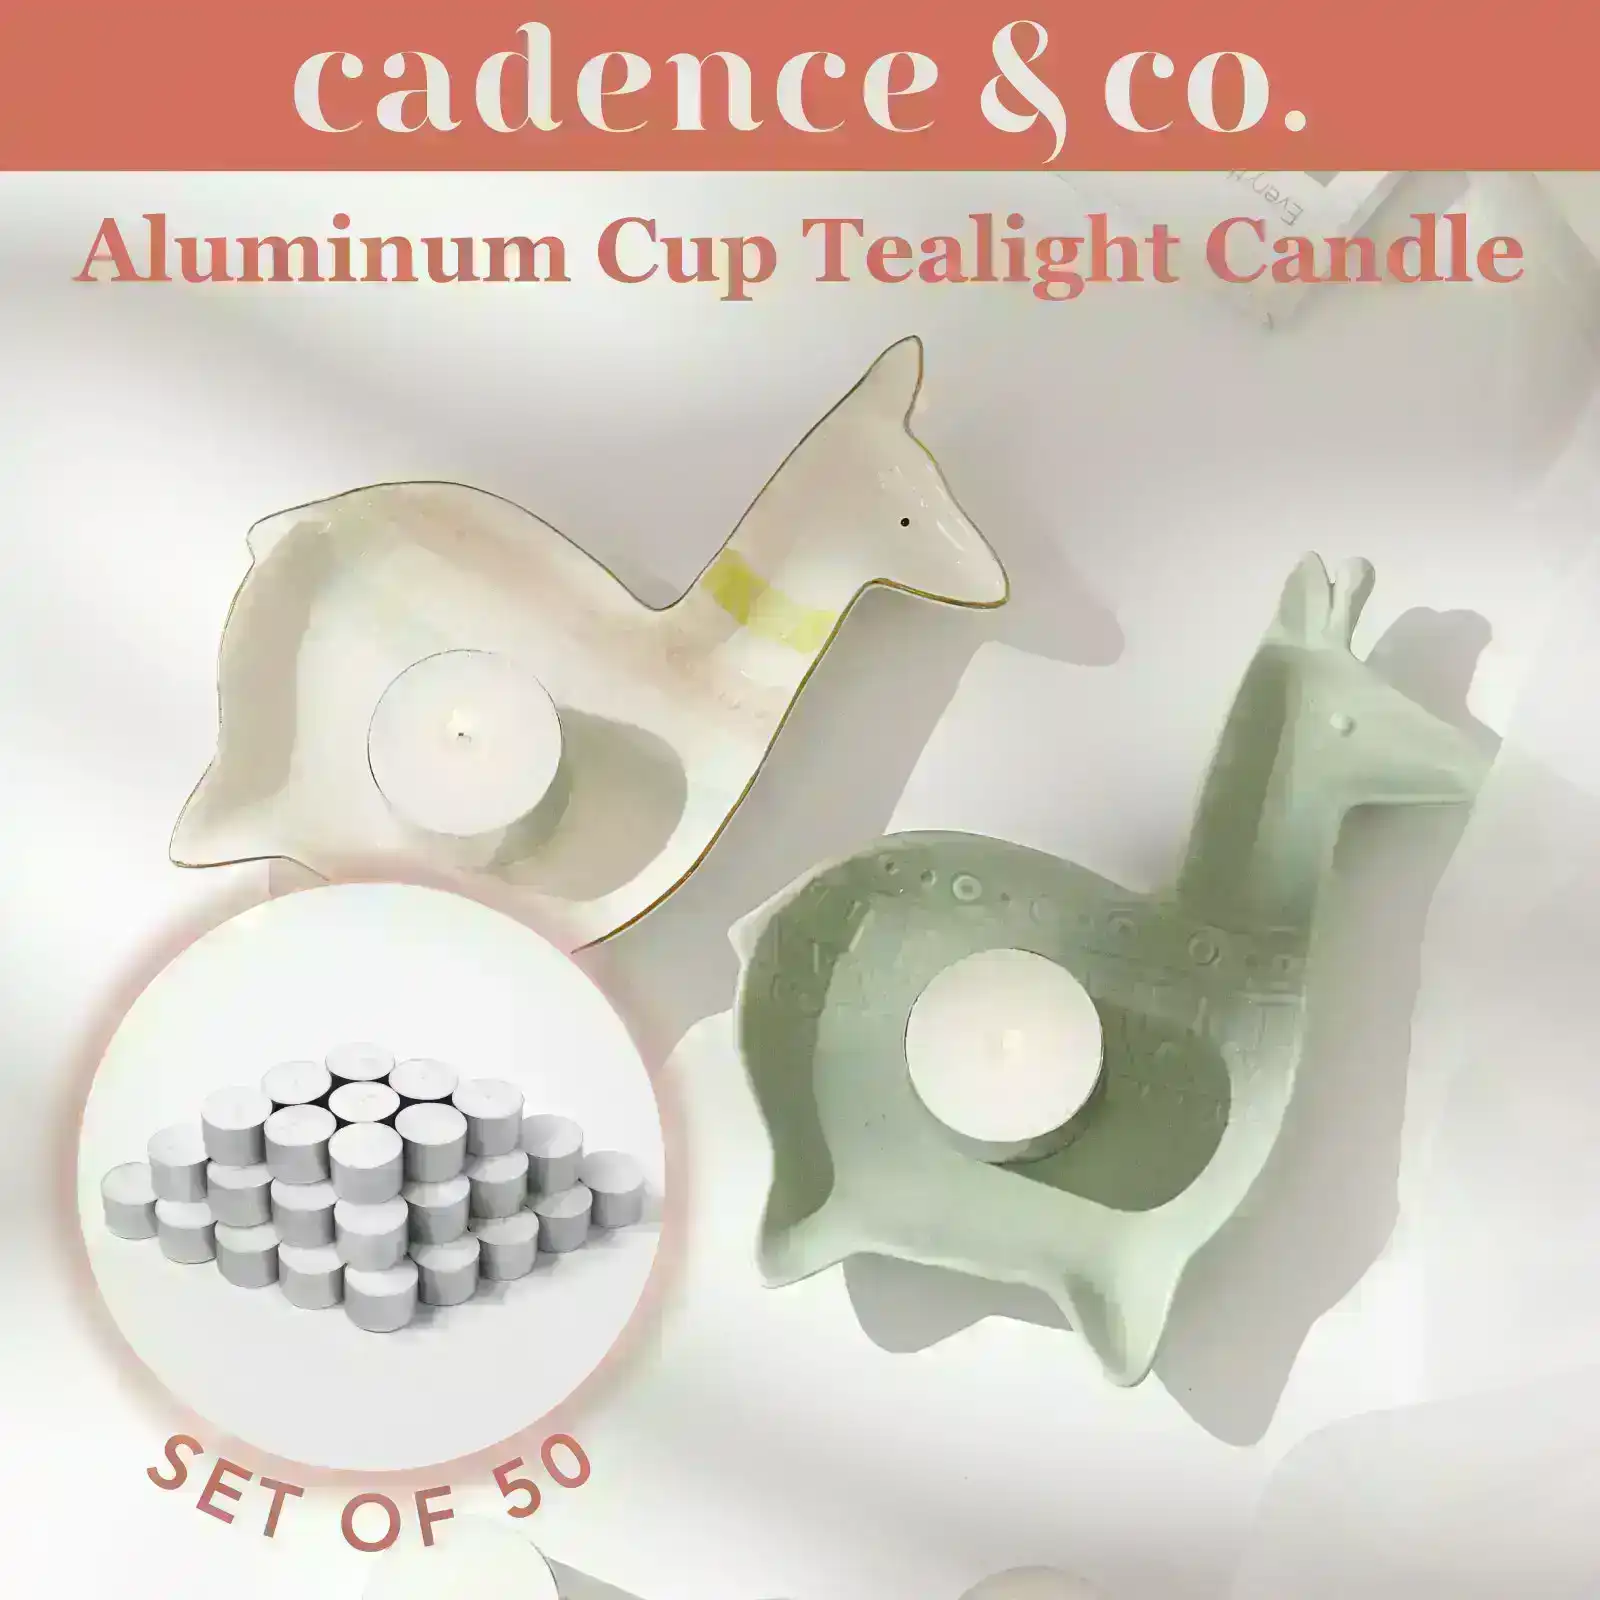 Cadence & Co Aluminum Cup Tealight Candle Set 50